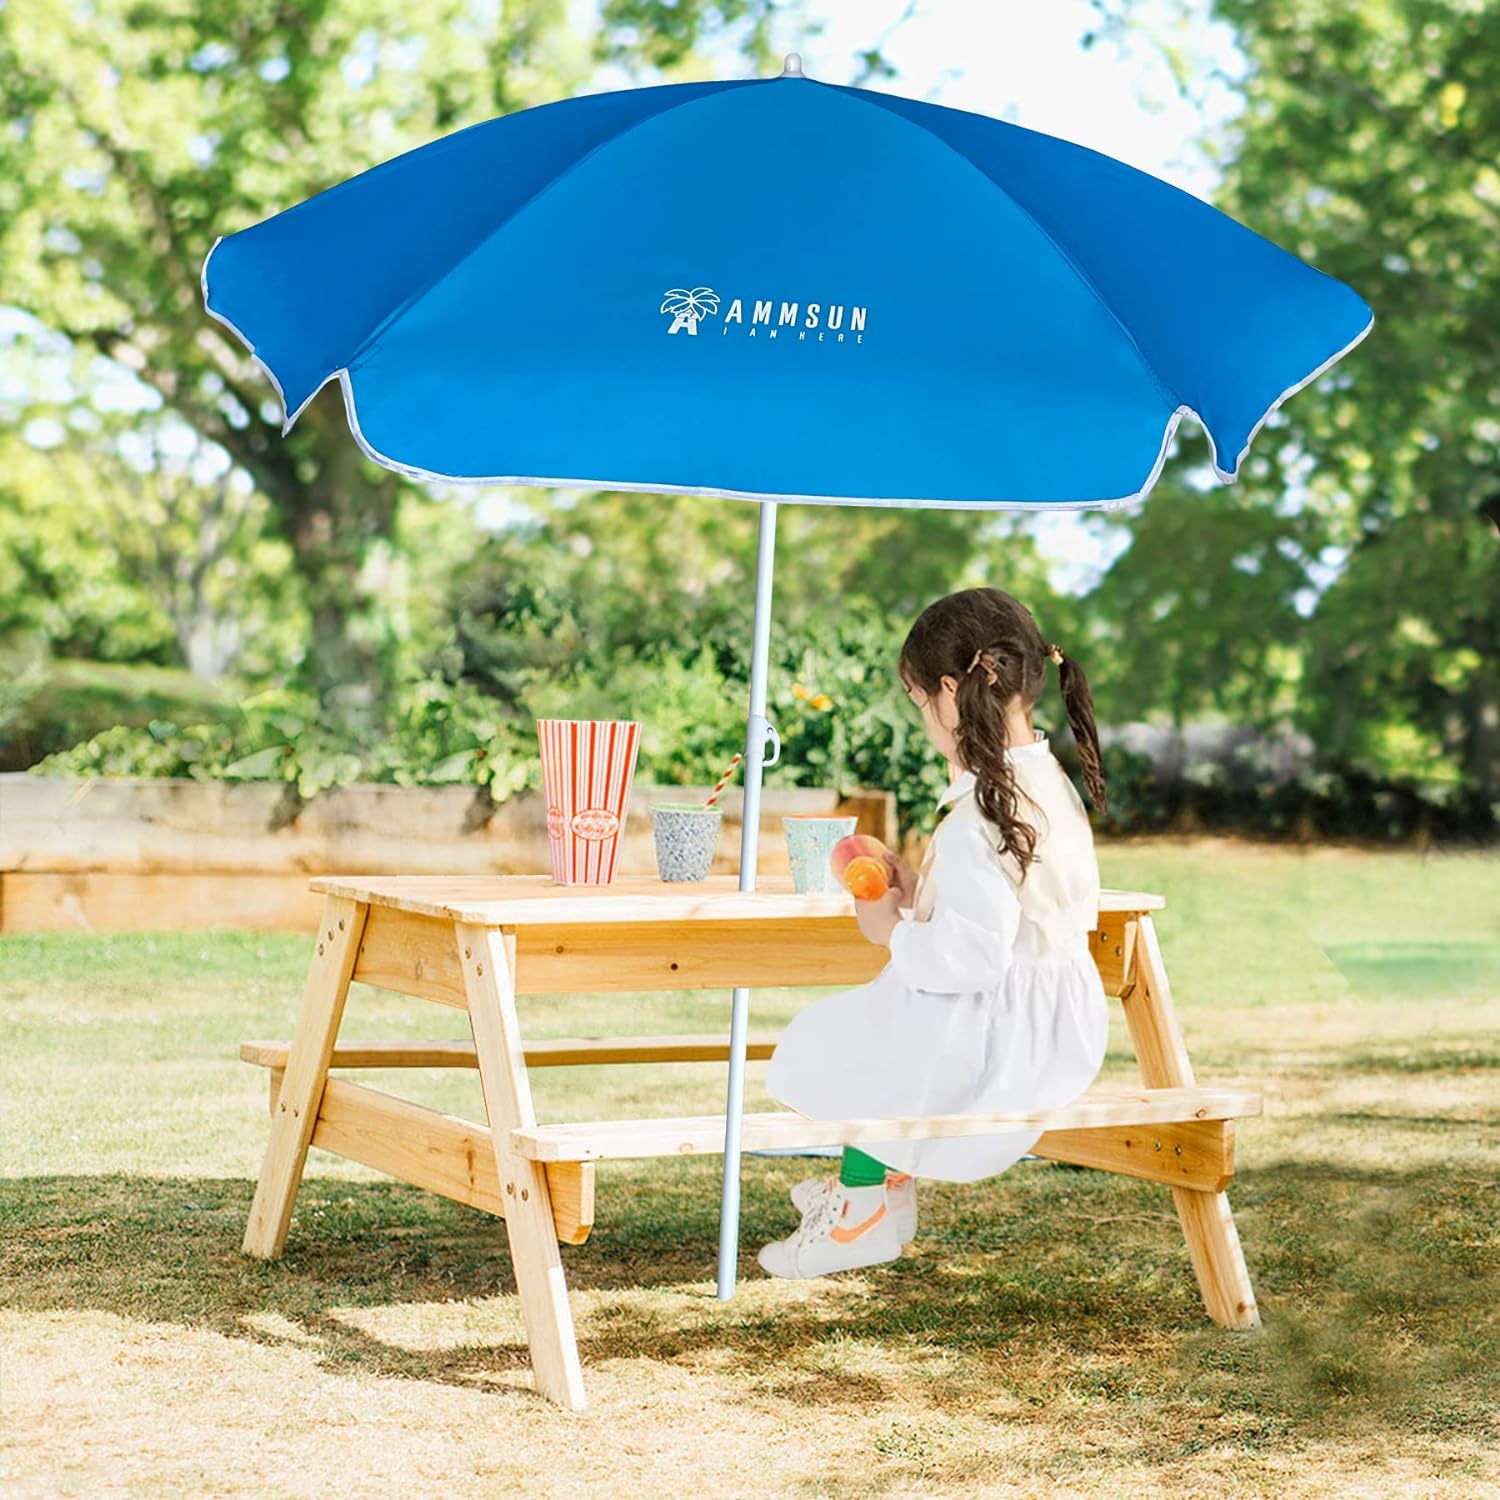 AMMSUN 5ft Beach Camping Garden Outdoor Kid Umbrella Sky Blue